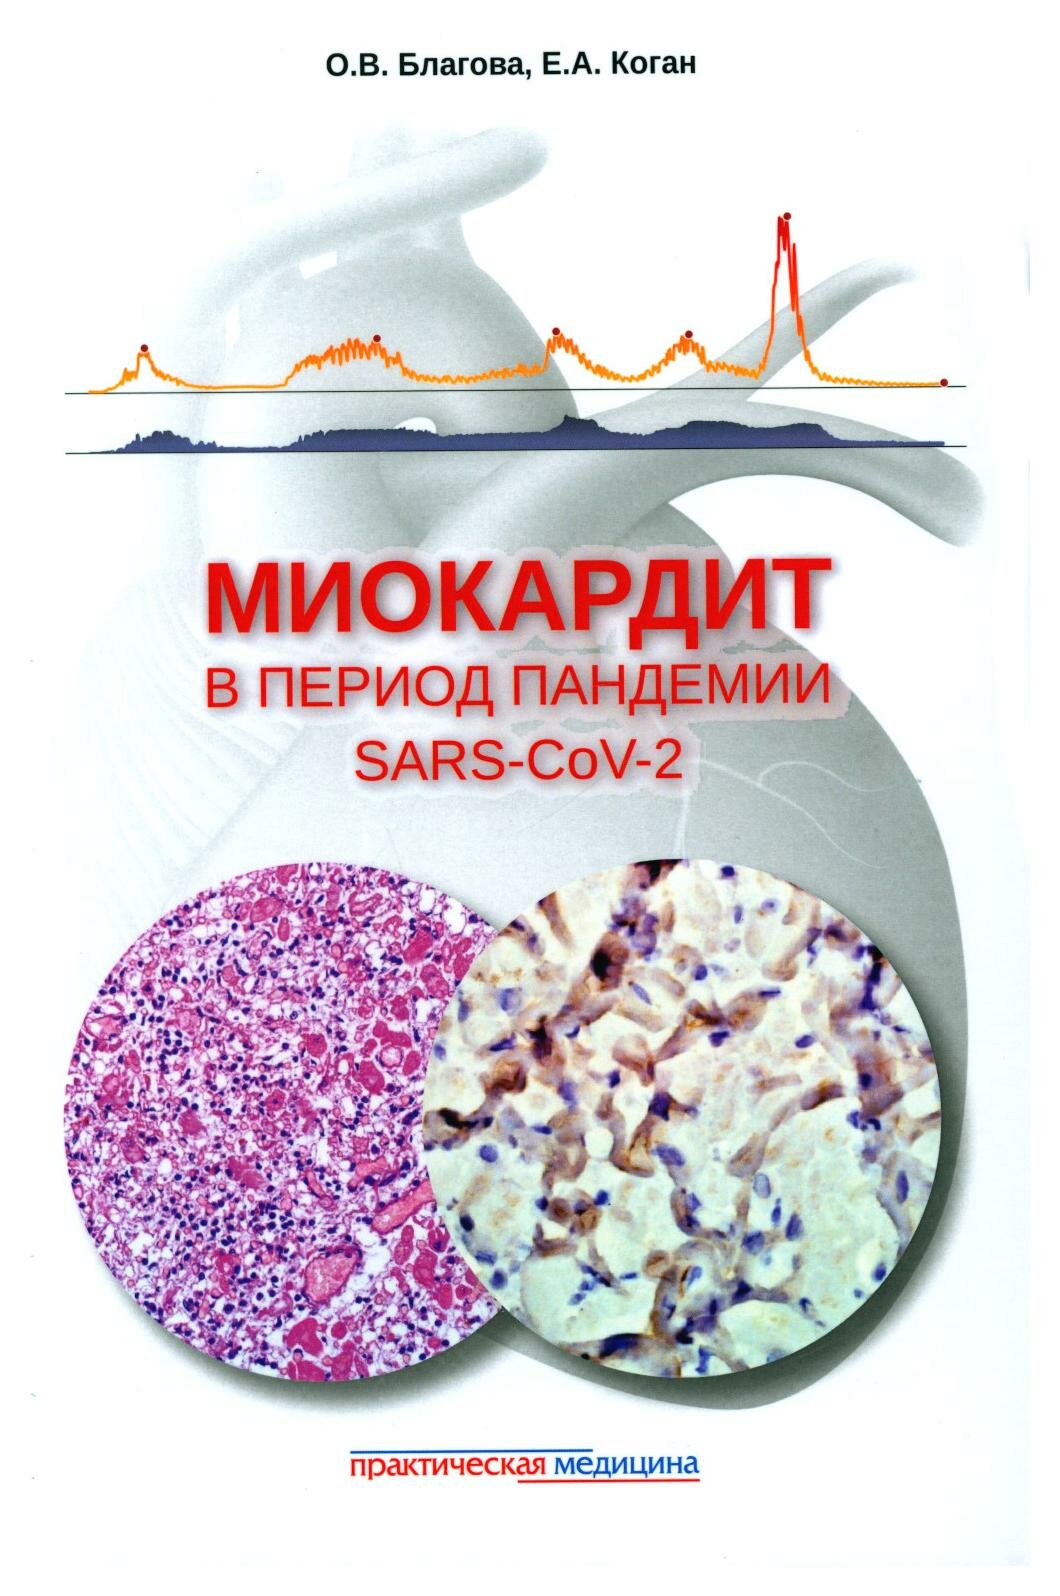 Миокардит в период пандемии SARS-CoV-2 - фото №1